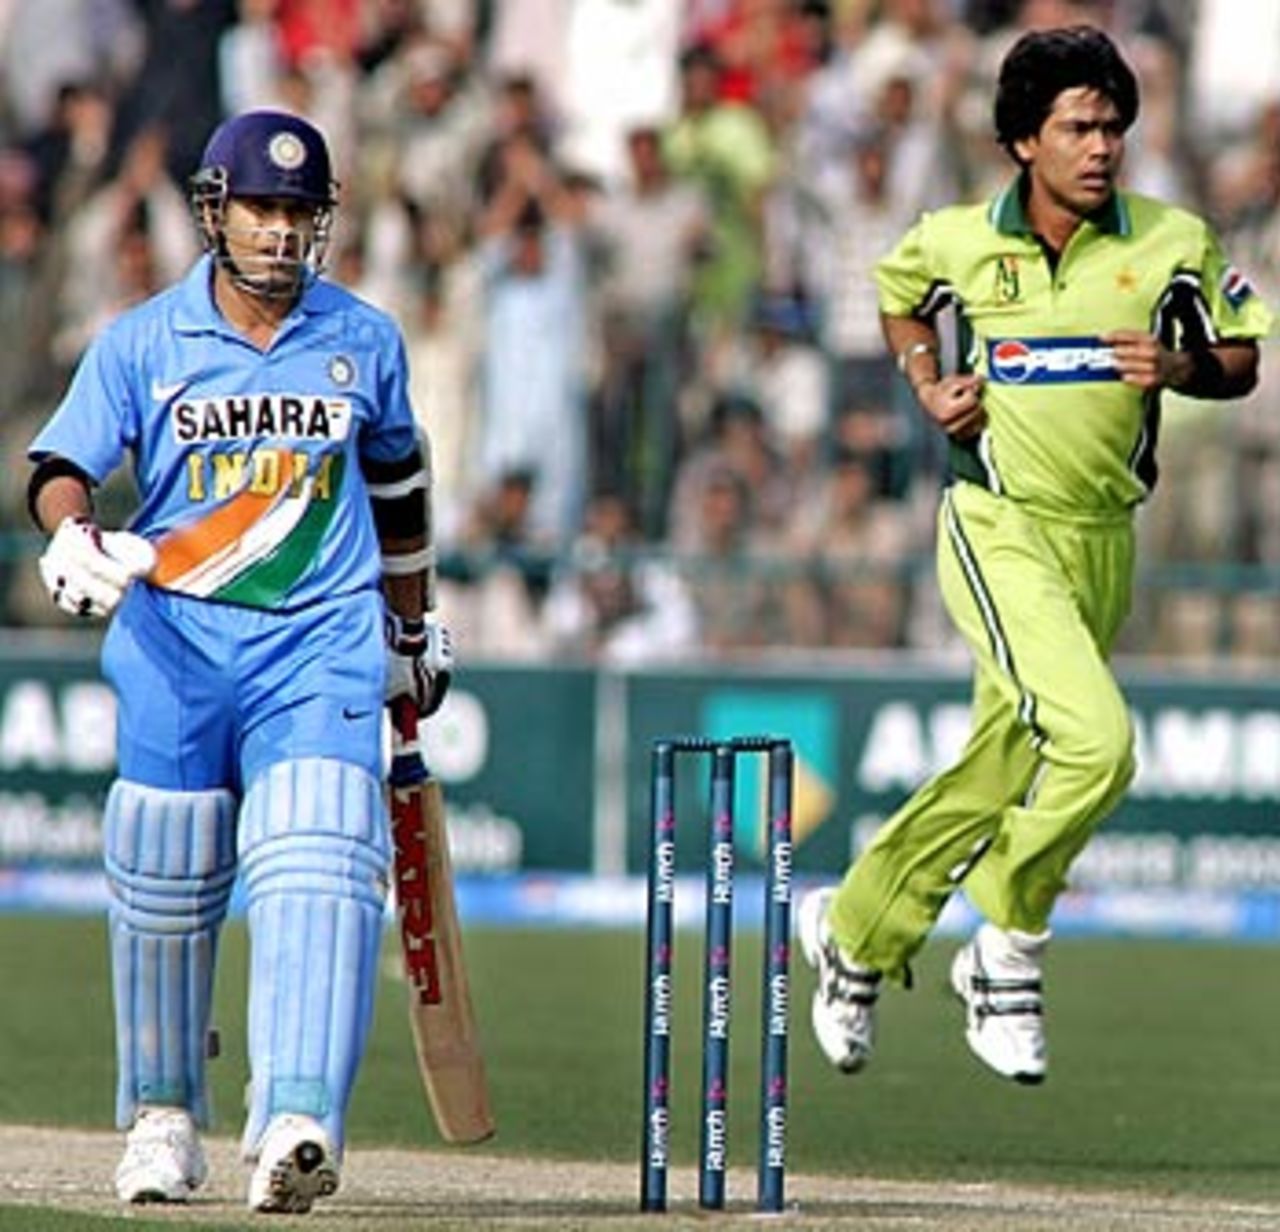 Sachin Tendulkar walks back after being dismissed by Mohammad Sami, Pakistan v India, 4th ODI, Multan, February 16 2006